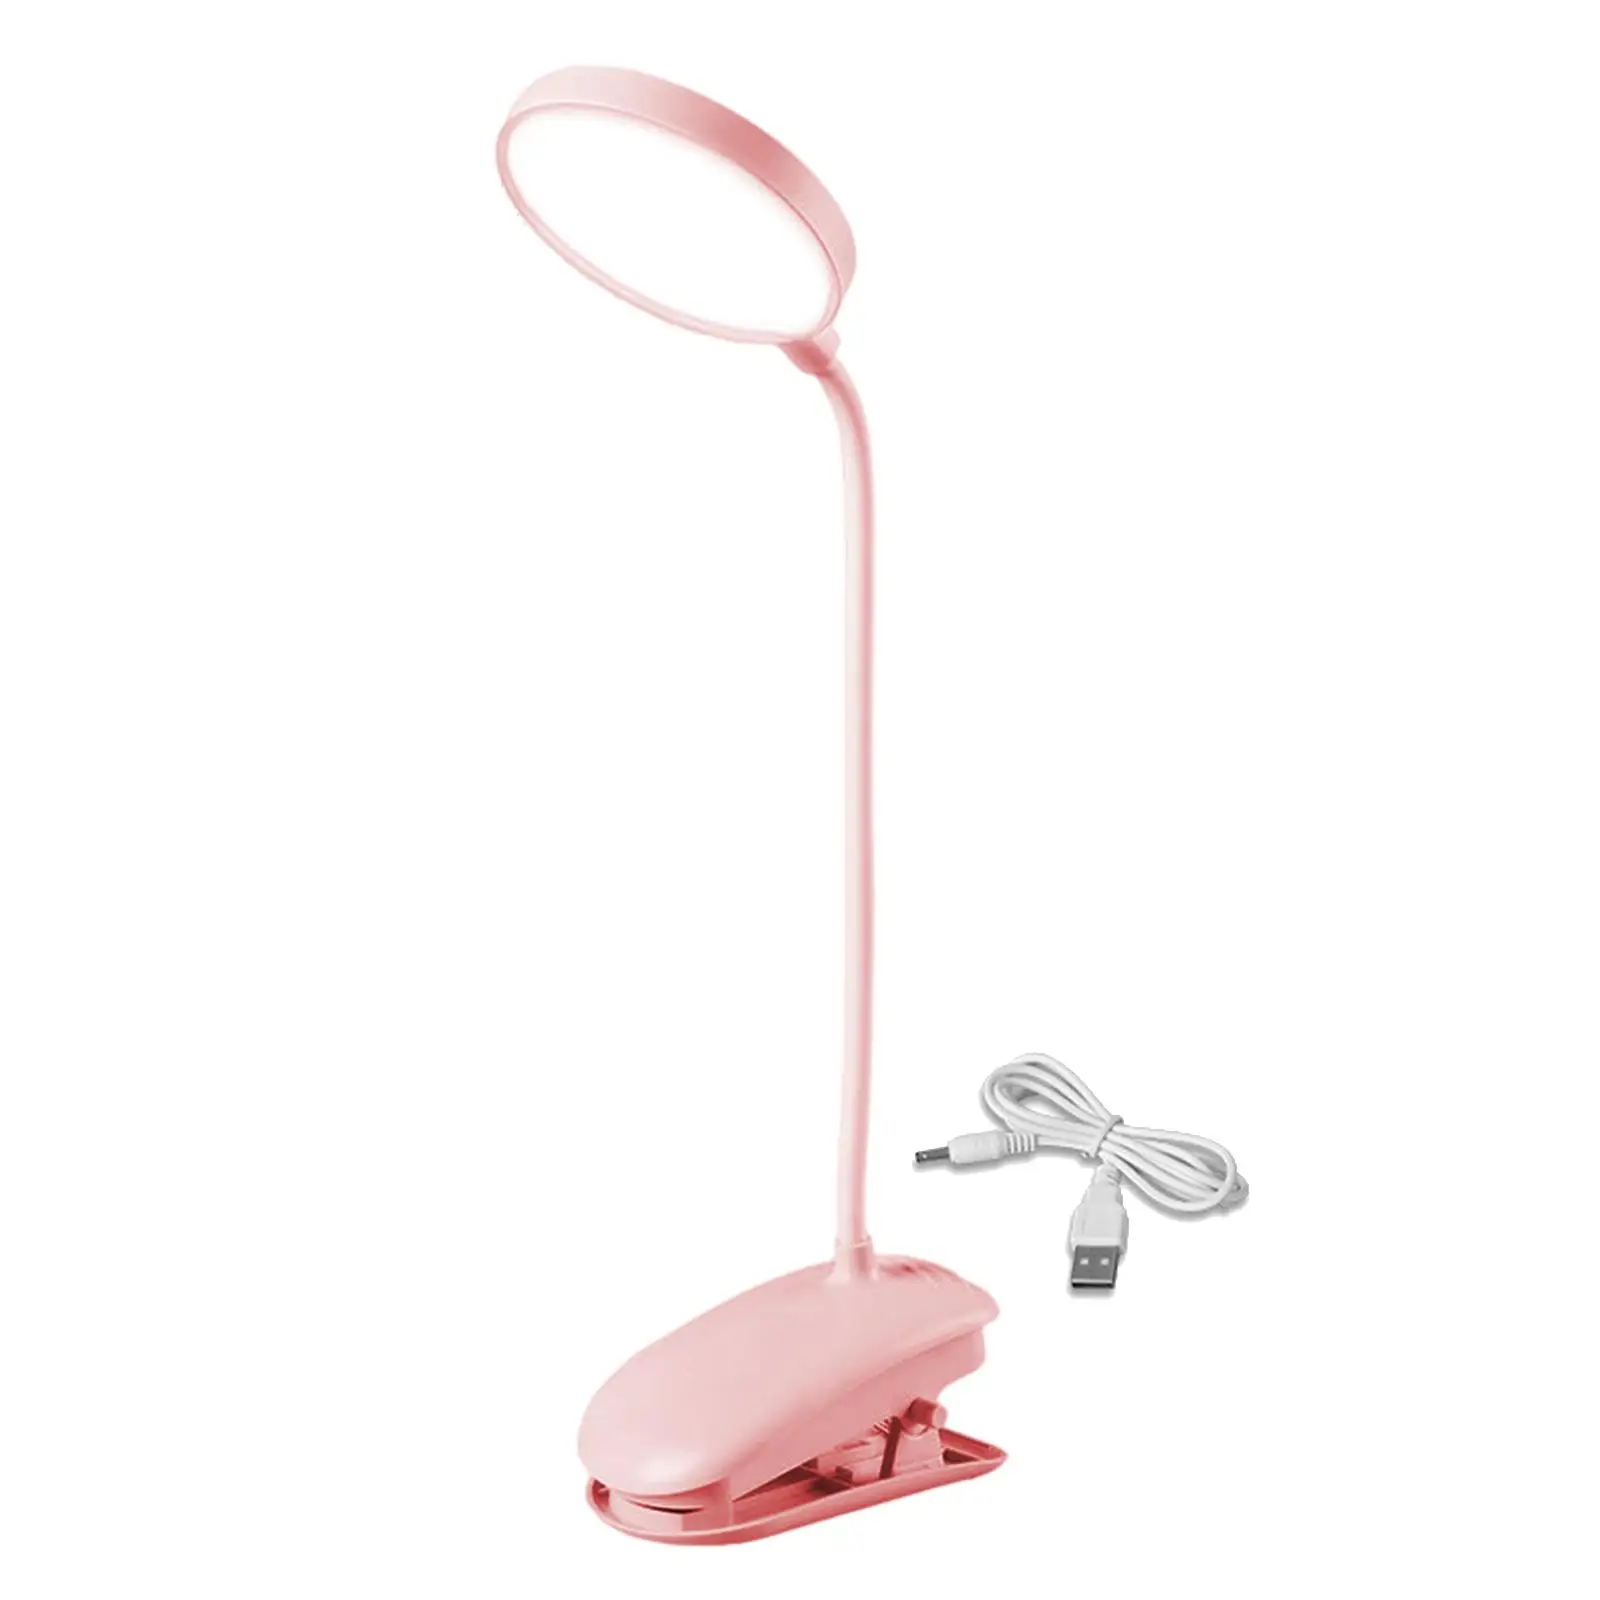 LED Desk Light Table Lamp Clip On Dimming Rechargeable Eye Protection Flexible Adjustable Clamp Light for Bedside Bedroom Dorm